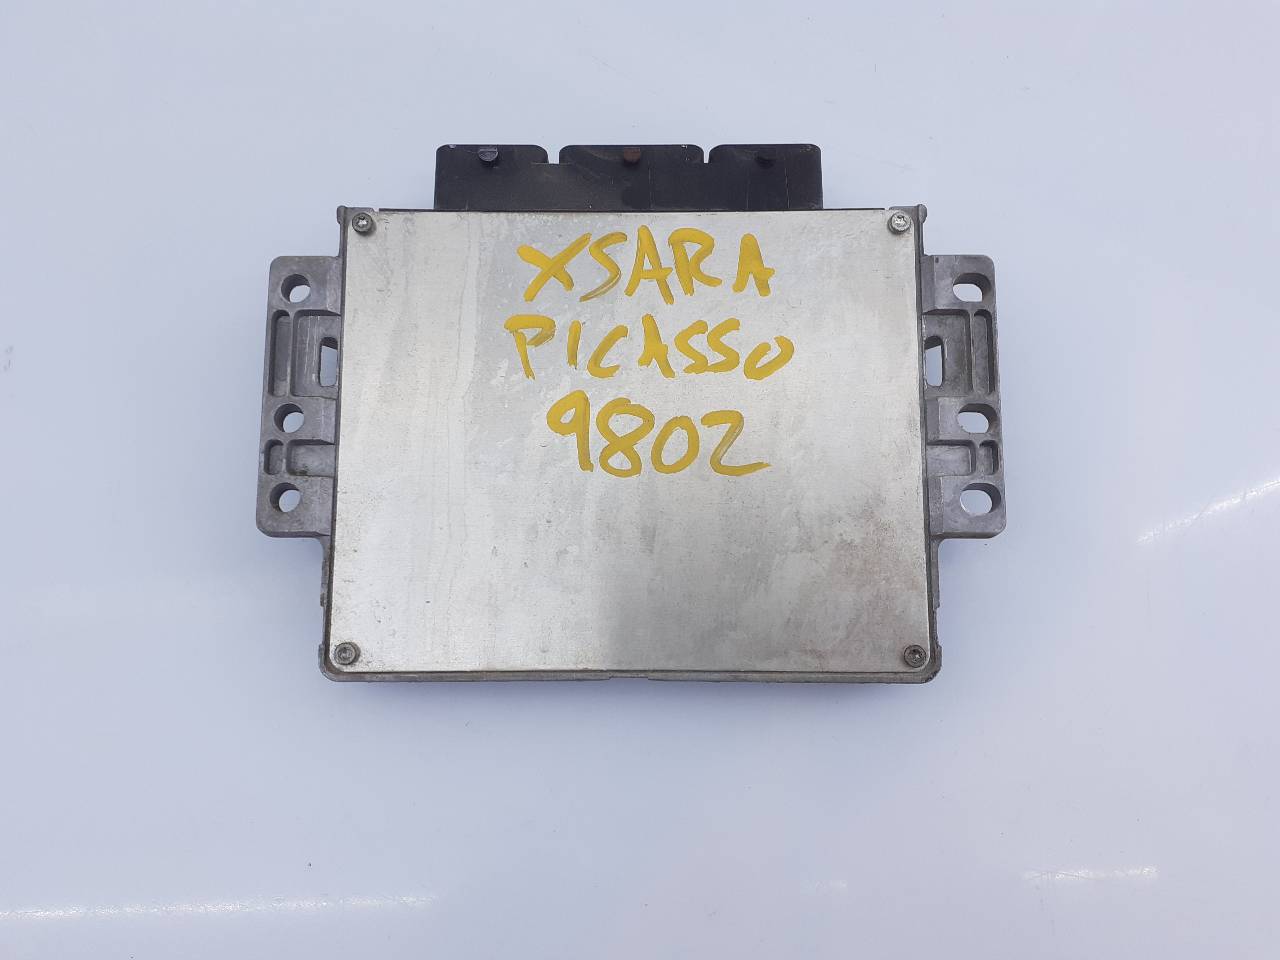 FIAT Xsara Picasso 1 generation (1999-2010) Engine Control Unit ECU 9640514780, 9632727280, E3-B2-14-1 18772462